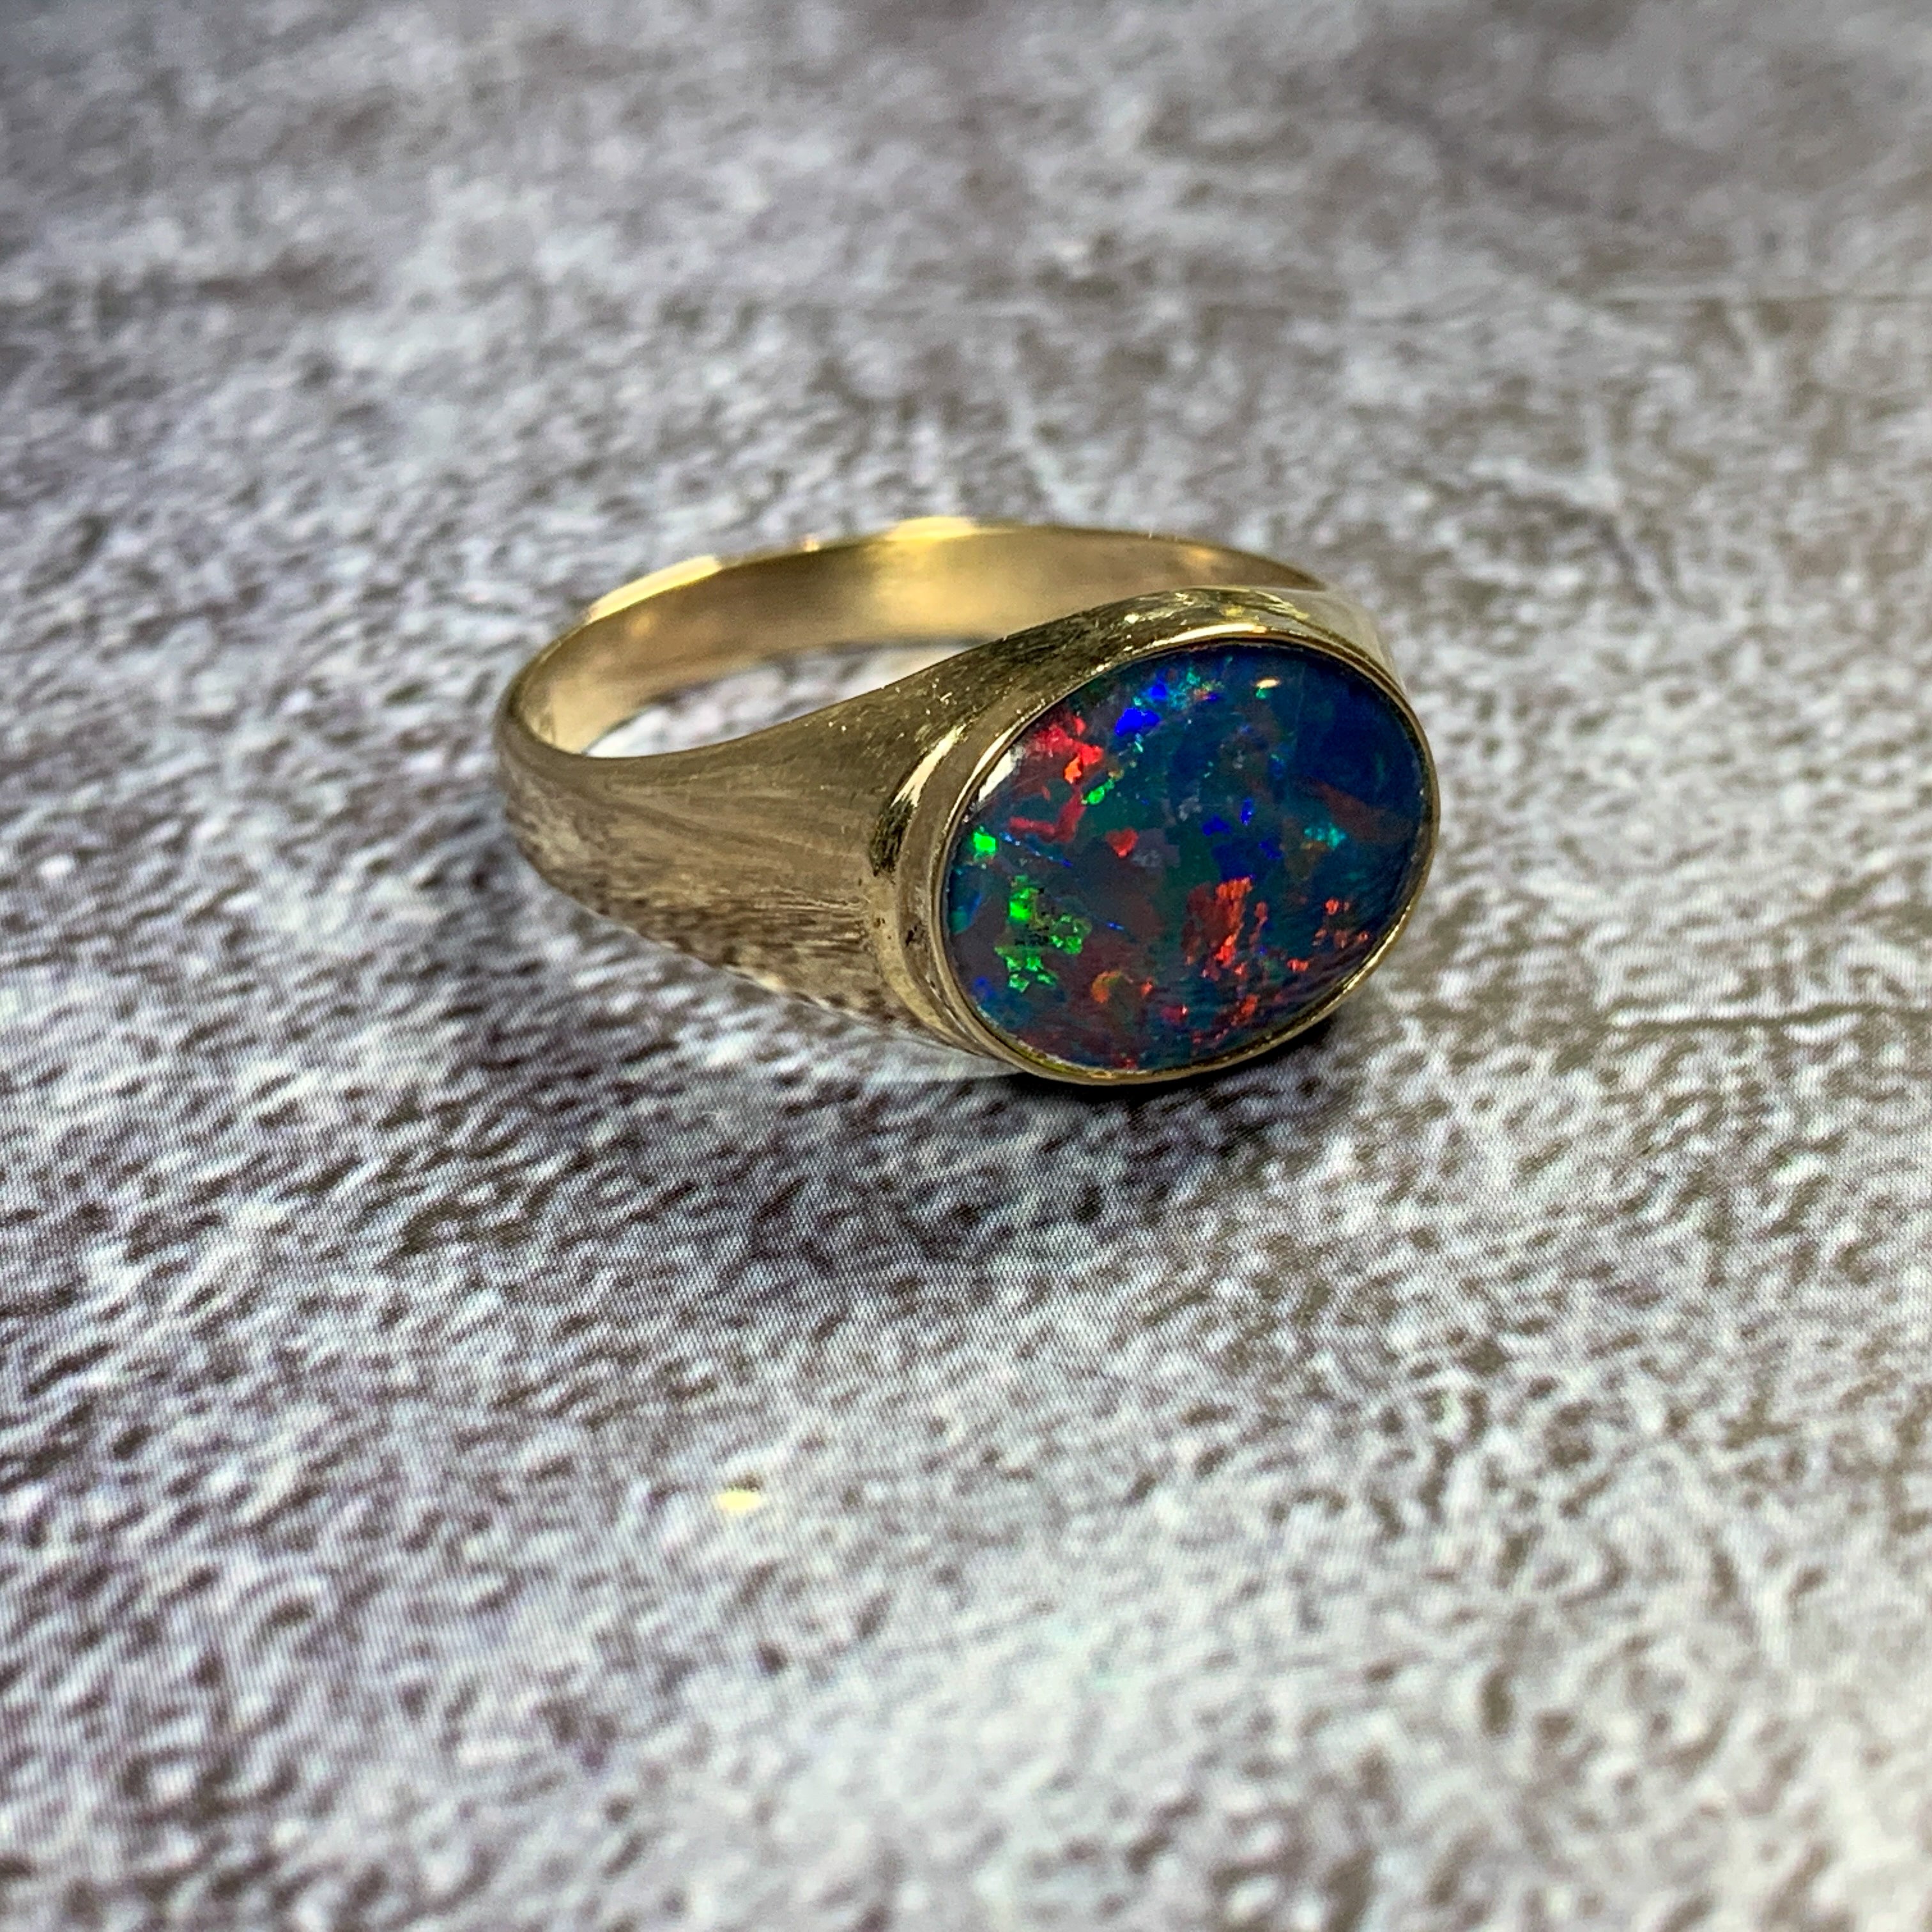 One 9kt Yellow Gold signet ring 12x10mm Opal triplet - Masterpiece Jewellery Opal & Gems Sydney Australia | Online Shop